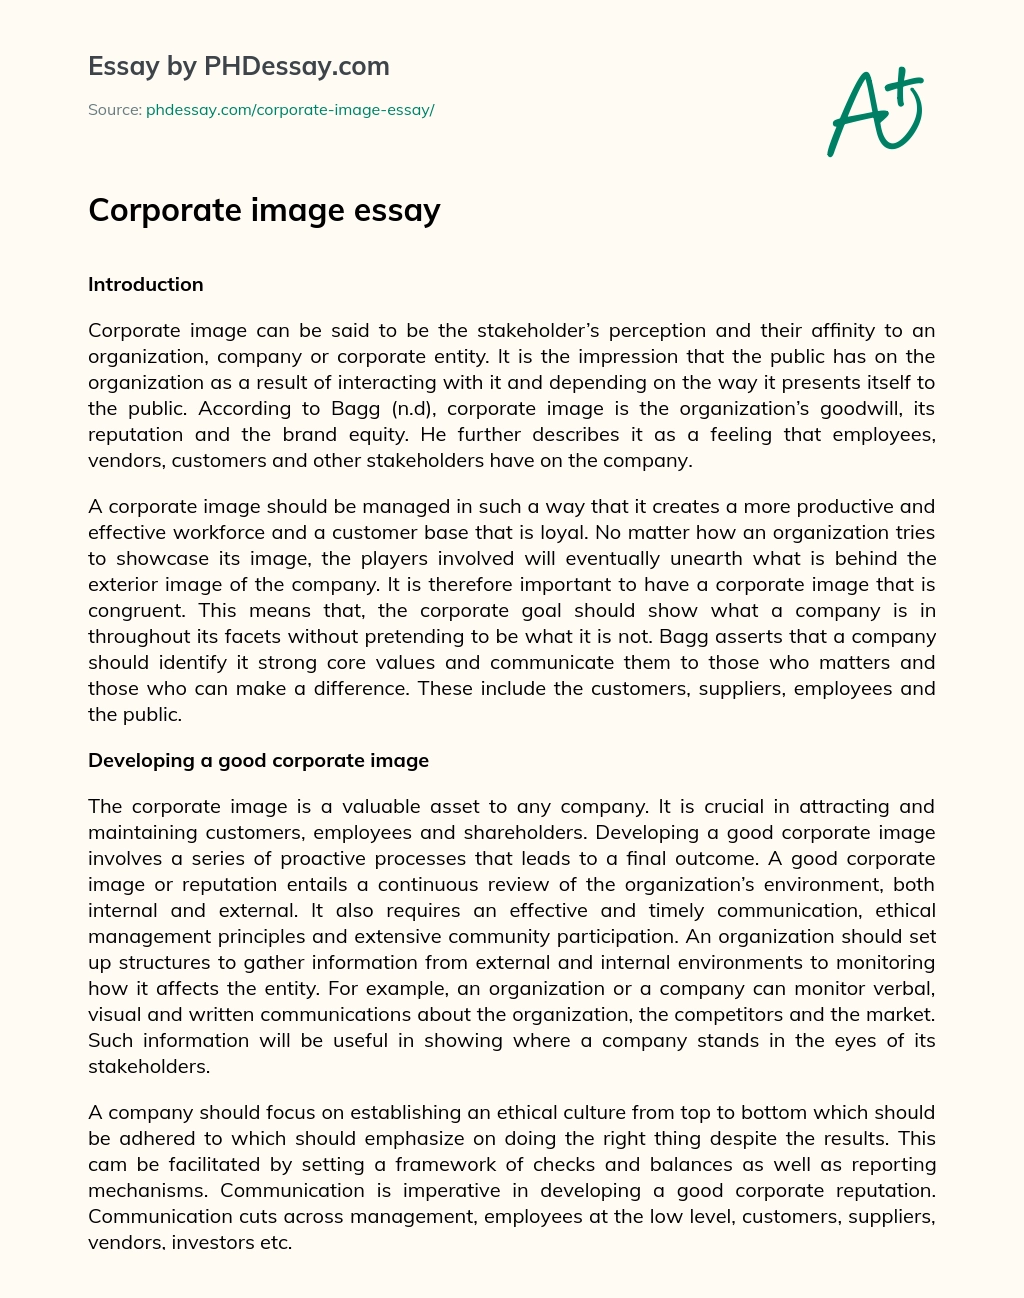 Corporate image essay essay